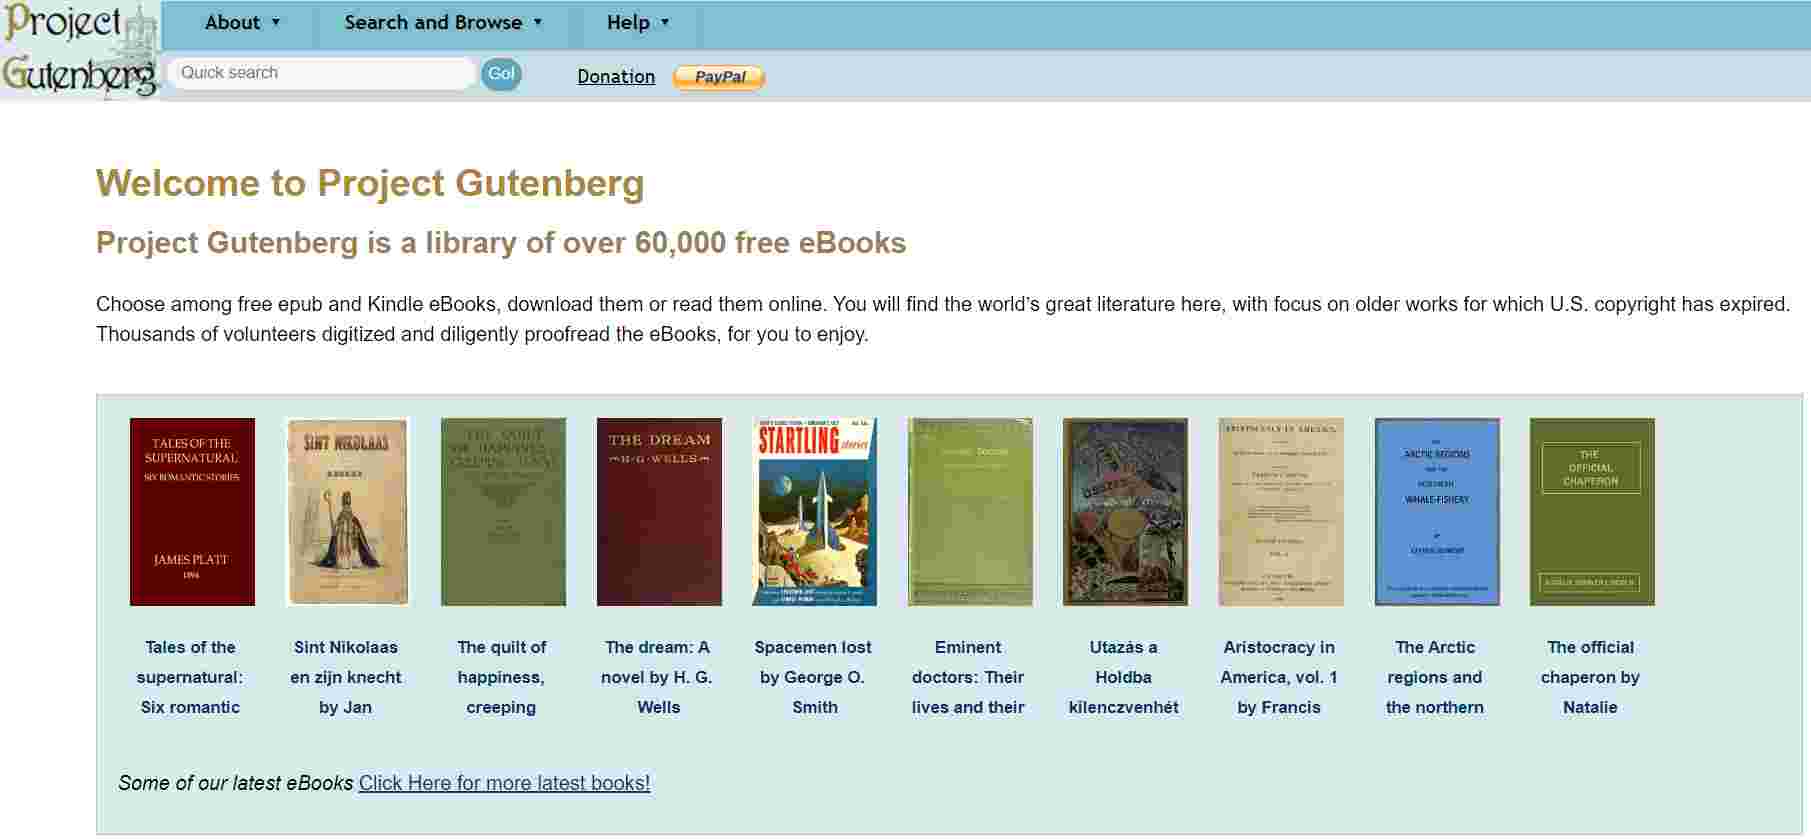 Libros electrónicos gratuitos Proyecto Gutenberg